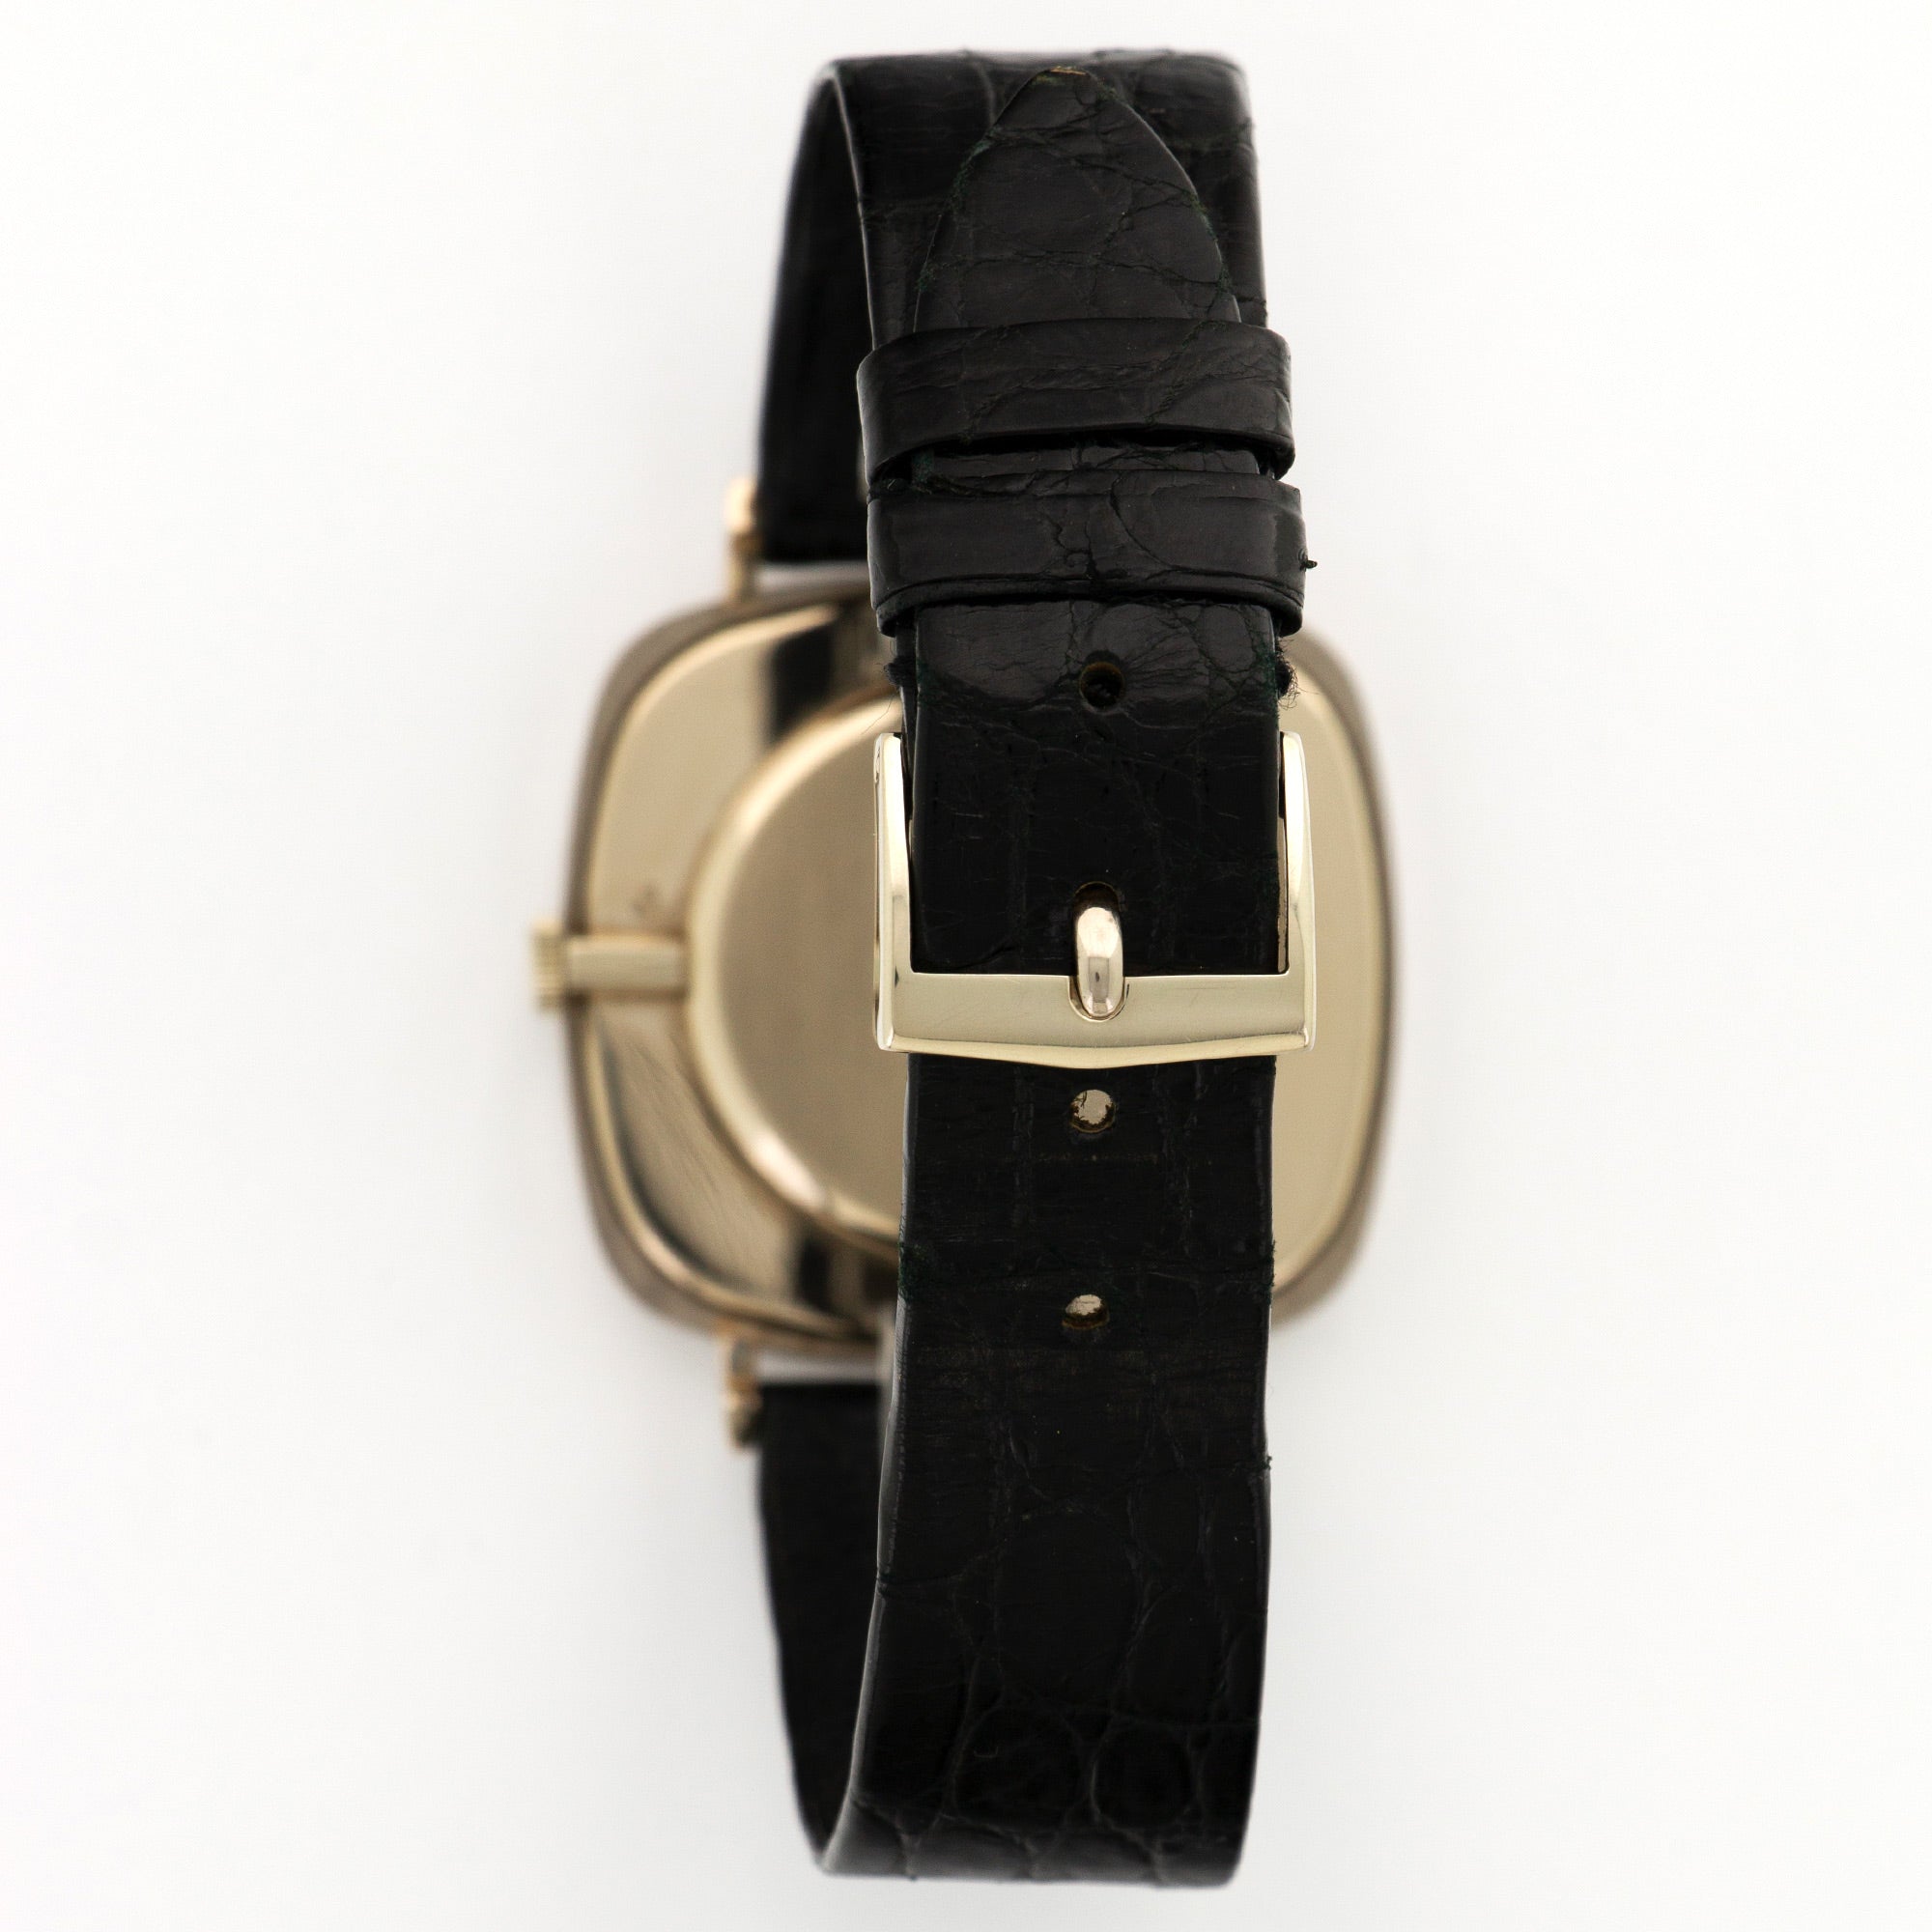 Audemars Piguet - Audemars Piguet White Gold Cushion-Shaped Strap Watch - The Keystone Watches